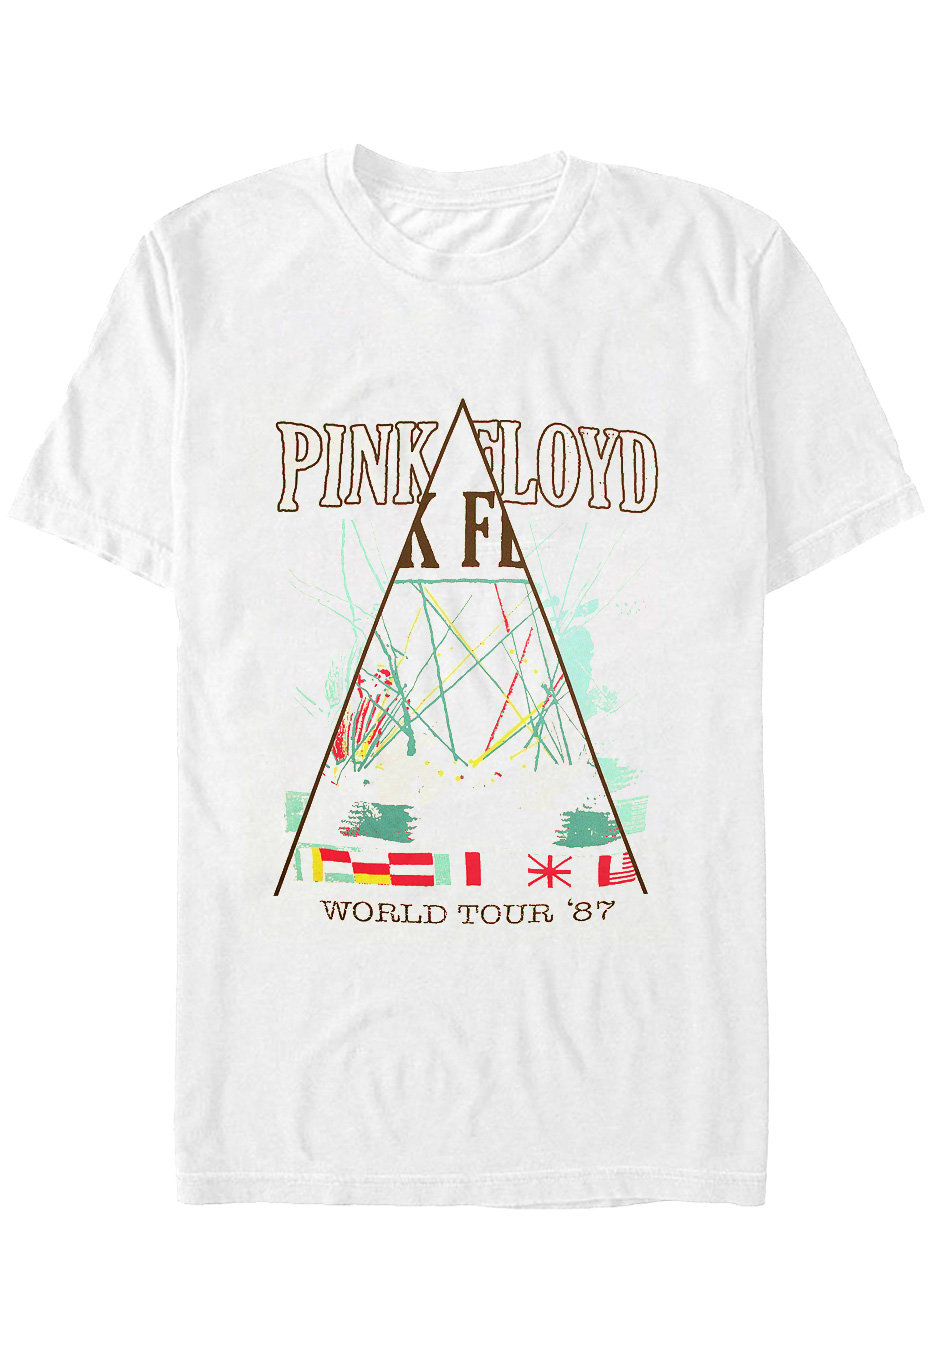 Pink Floyd - World Tour 87 White - T-Shirt